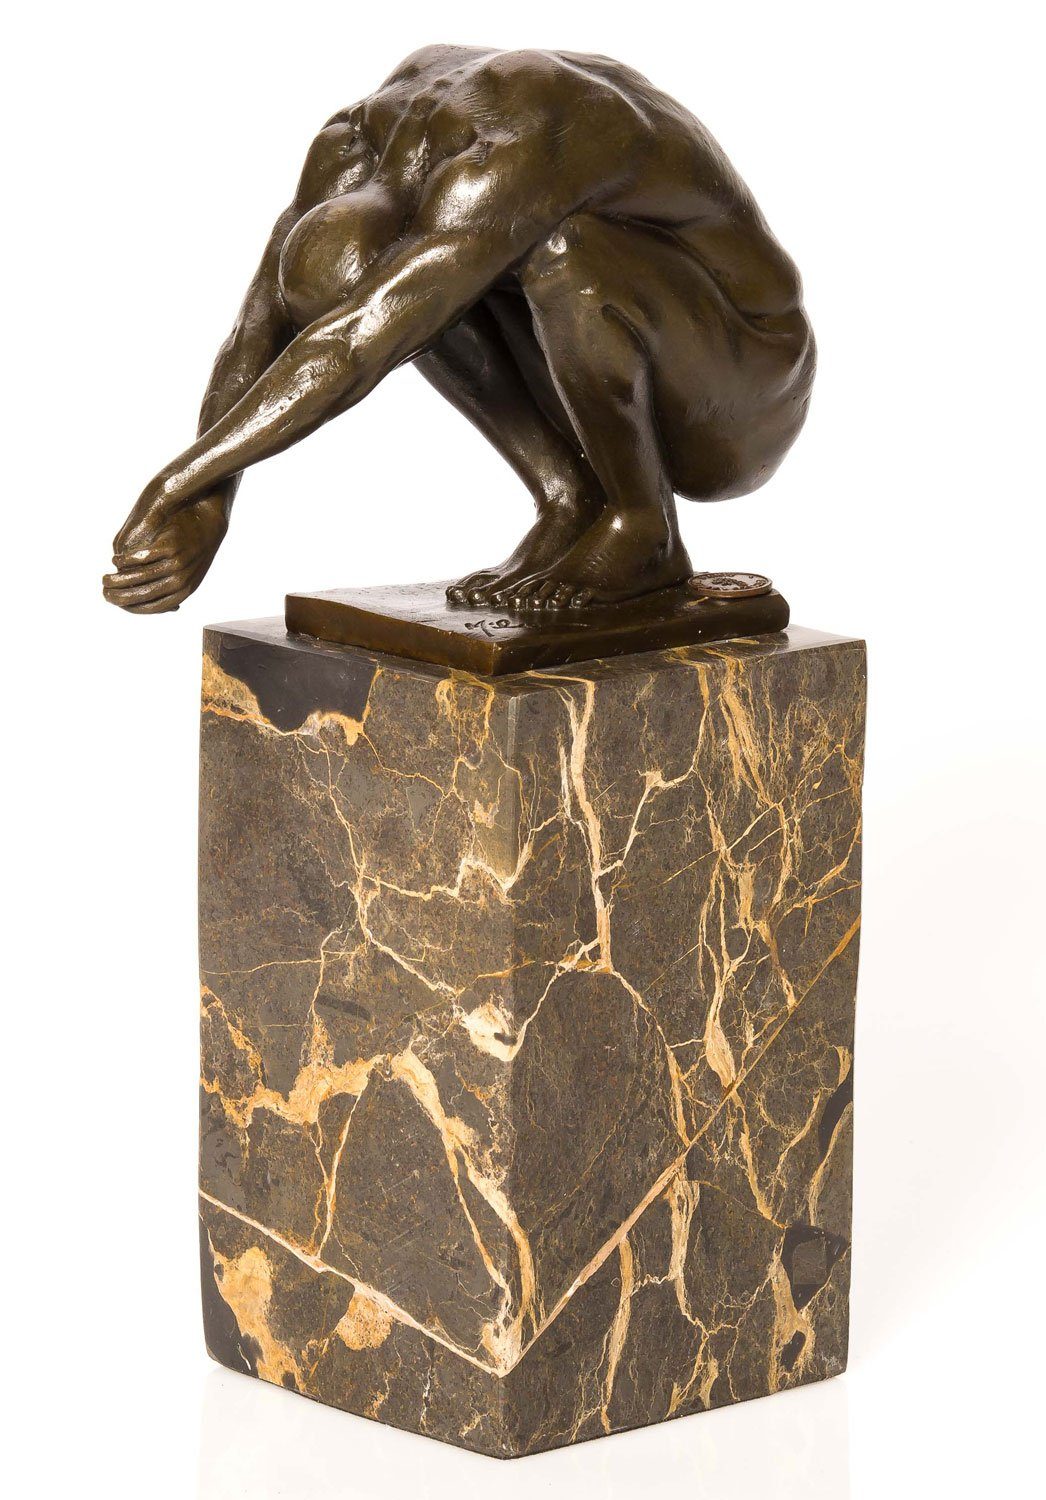 Turmspringer Schwimmer Erotik Skulptur Skulptur Aubaho Skulptur Bronze Akt Figur antik